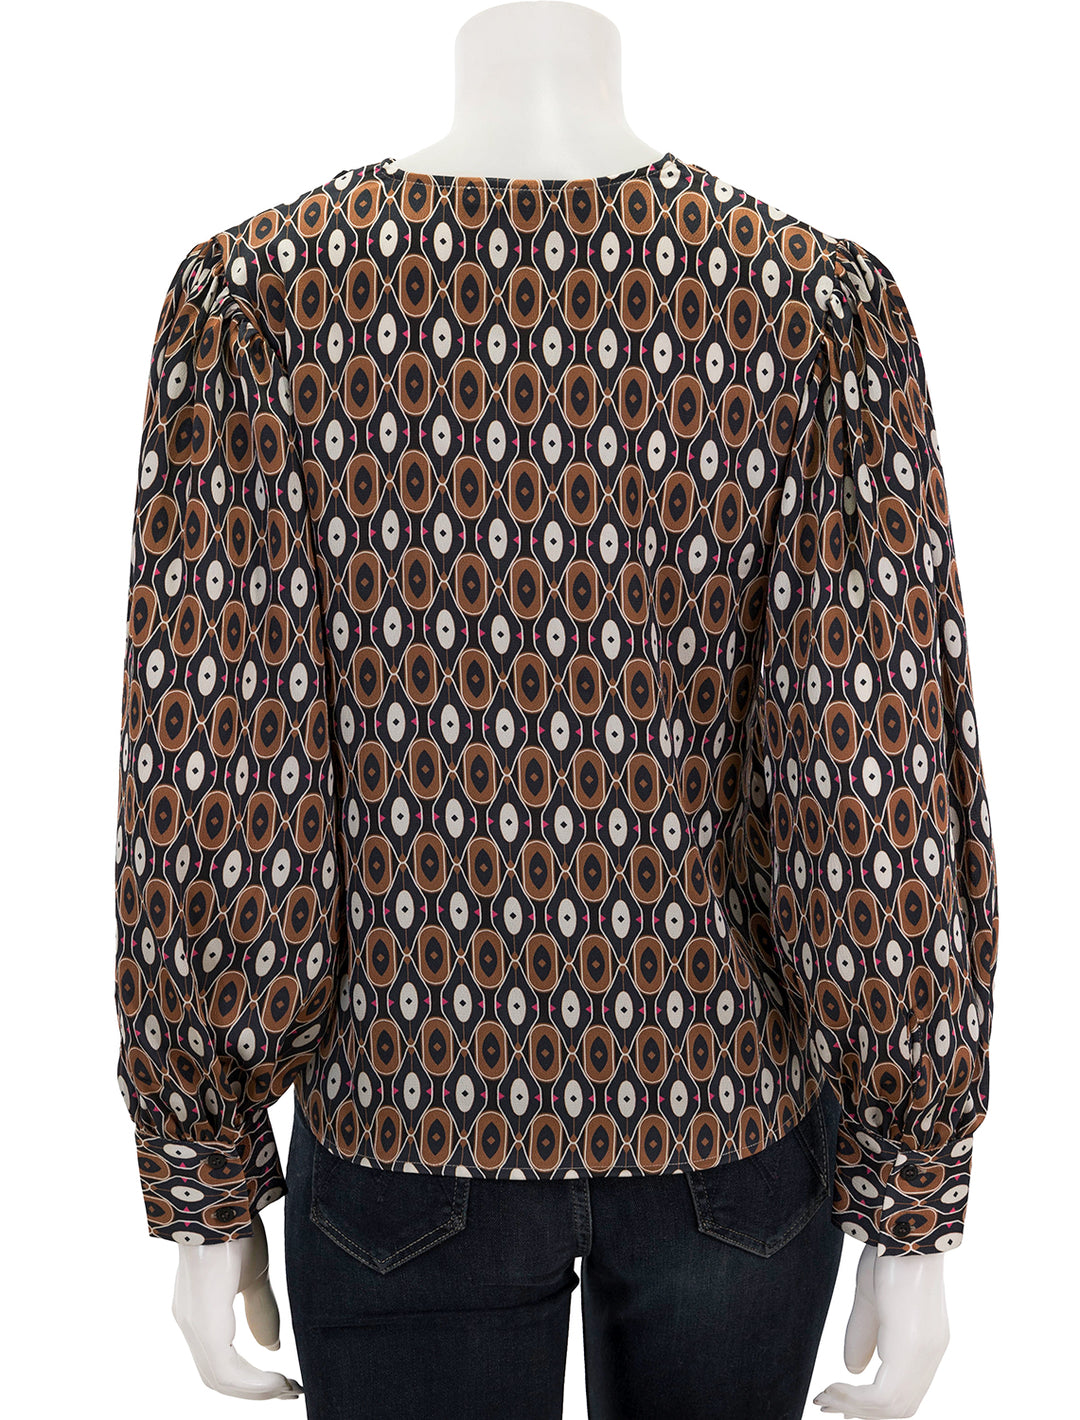 Back view of Vilagallo's camisa marlene geometric blouse.